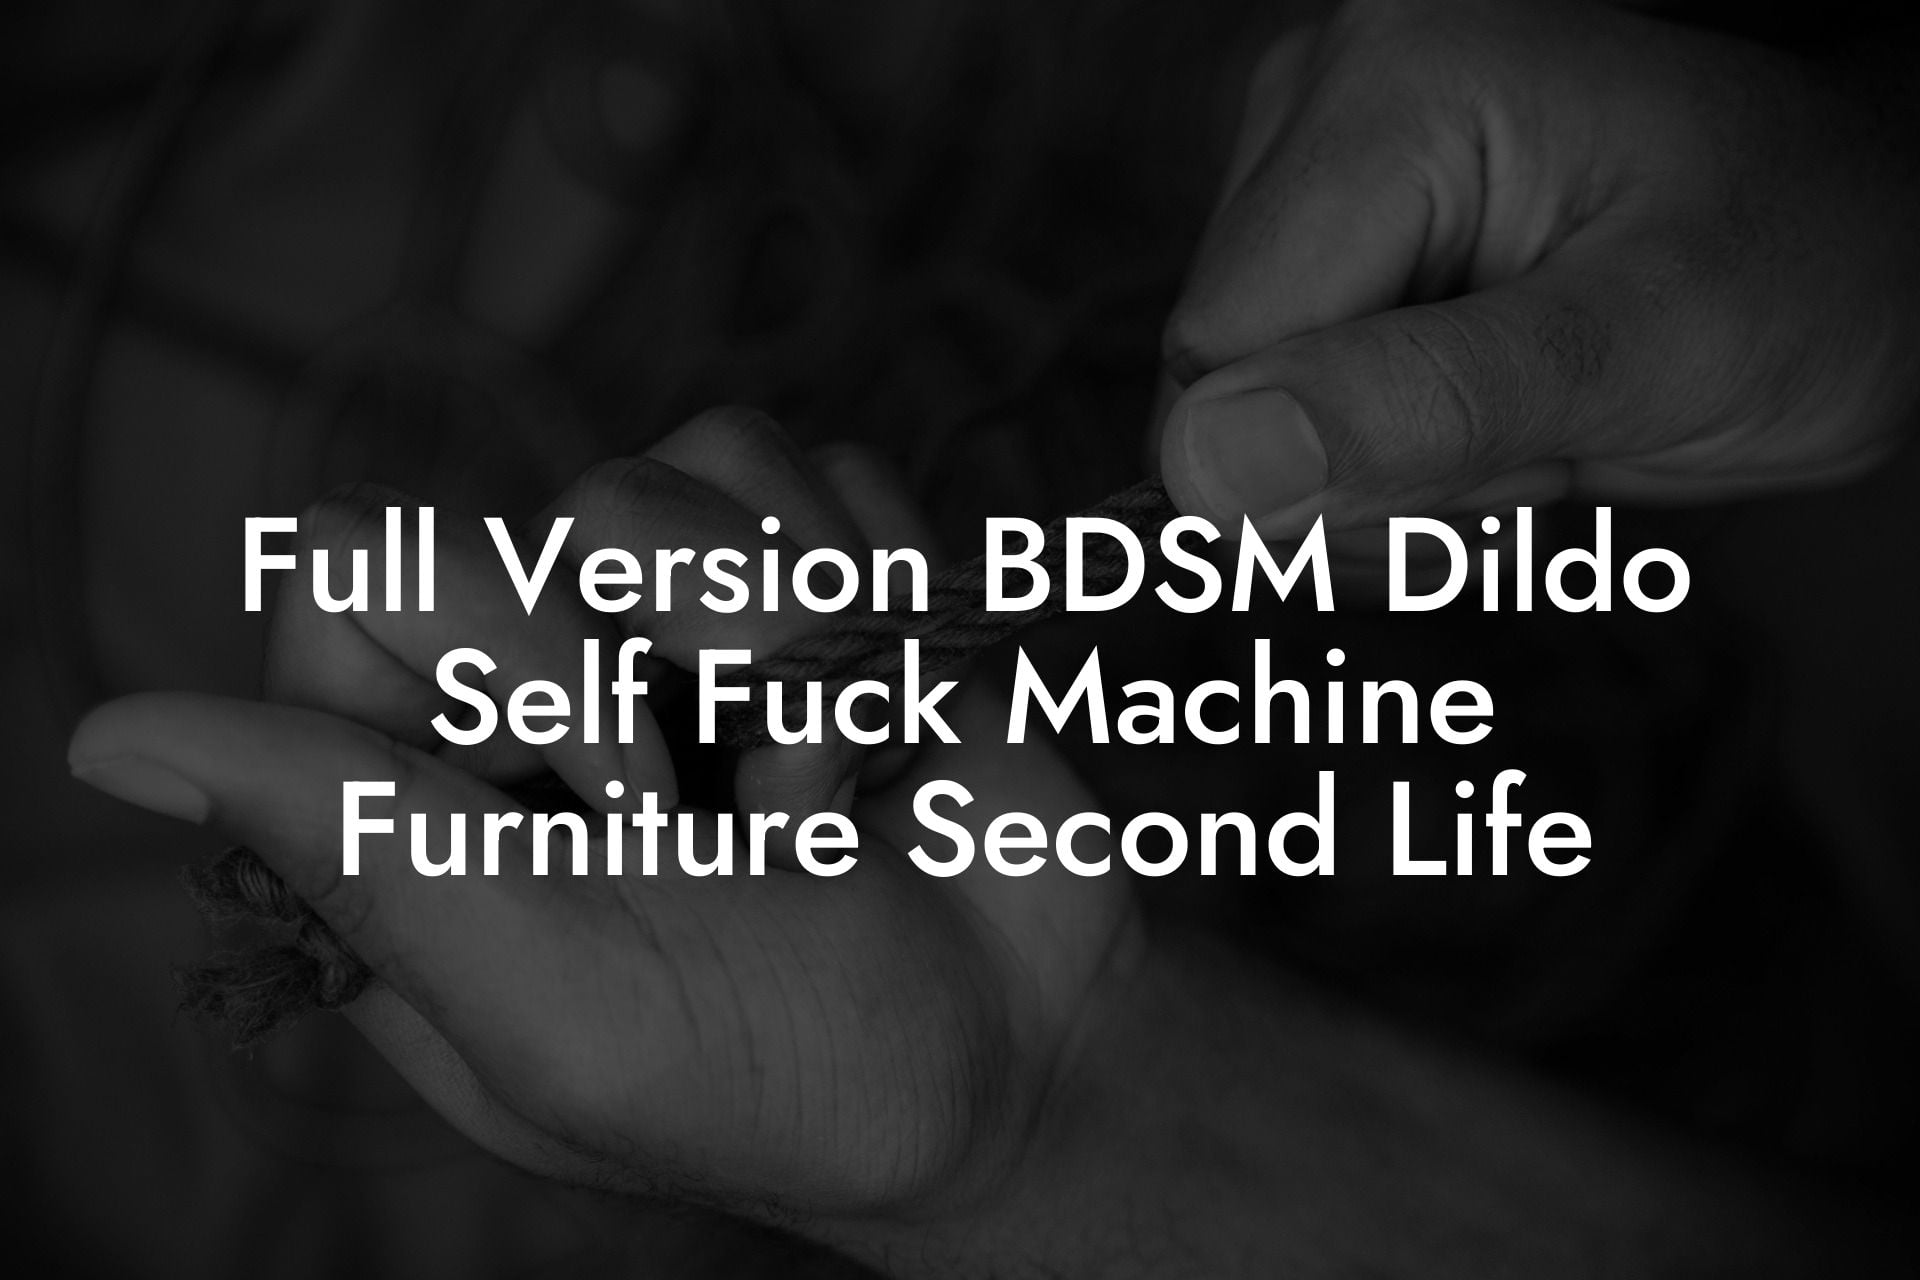 Full Version BDSM Dildo Self Fuck Machine Furniture Second Life